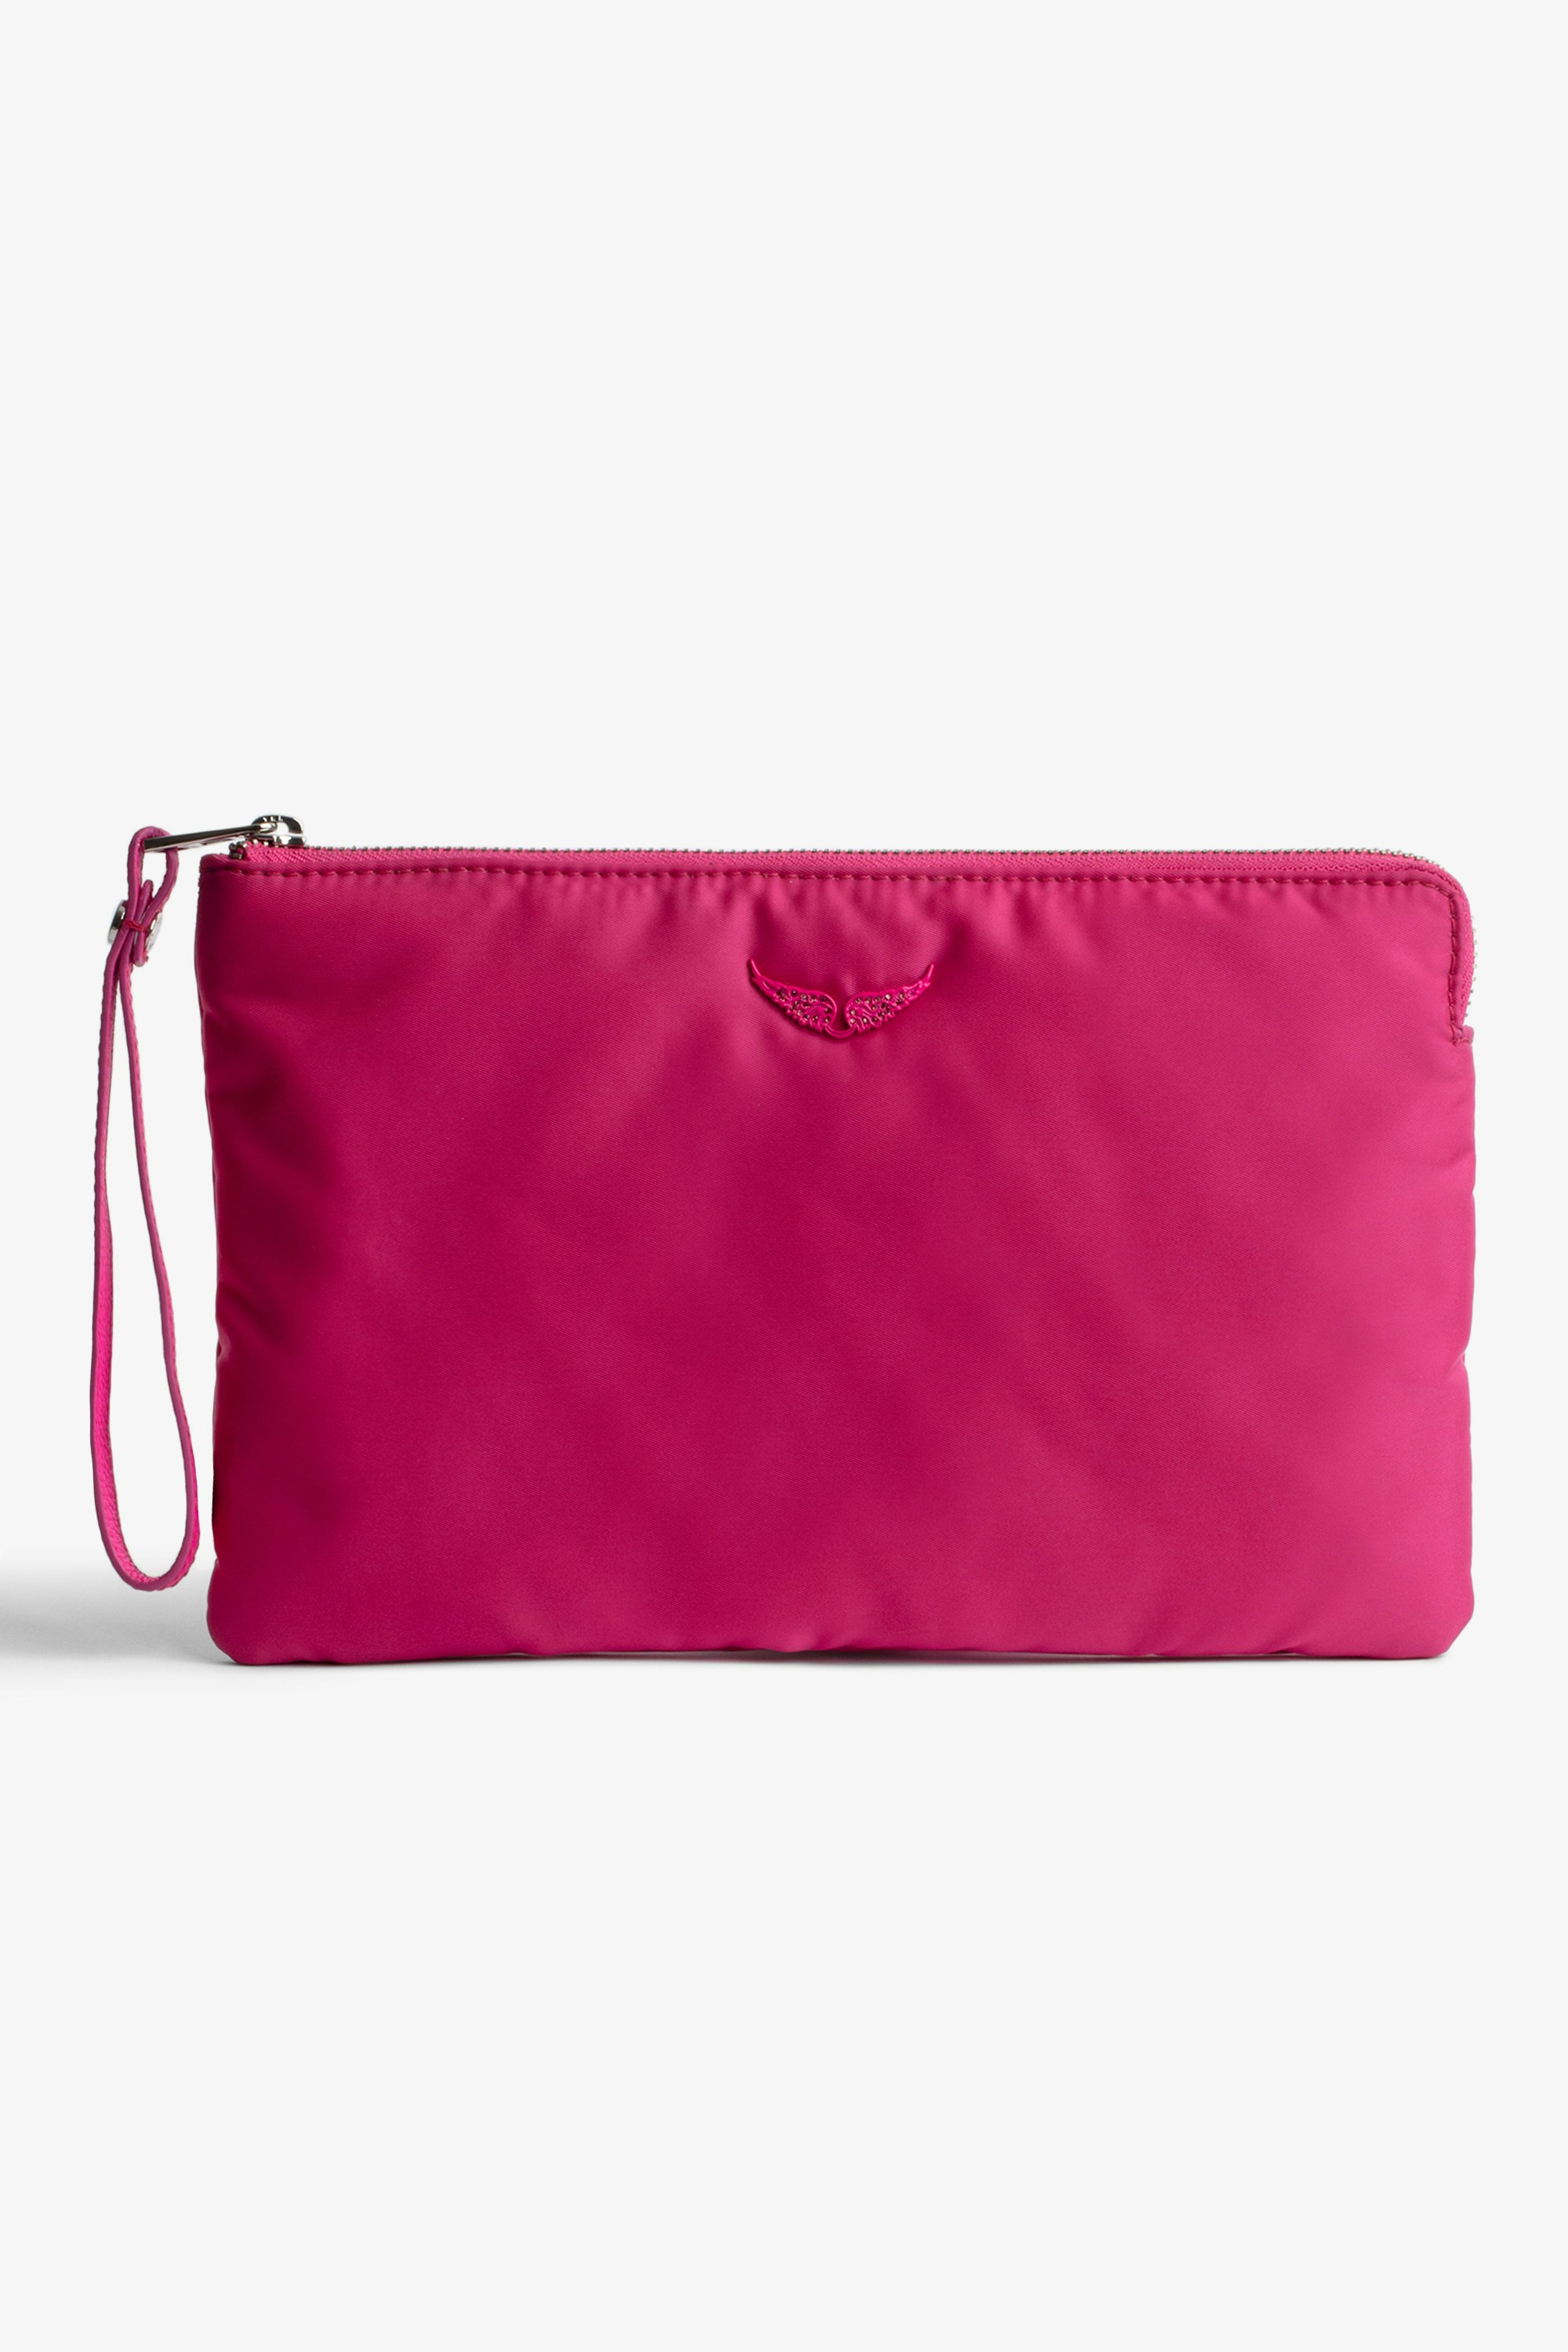 Uma clutch Women's zipped clutch in pink nylon